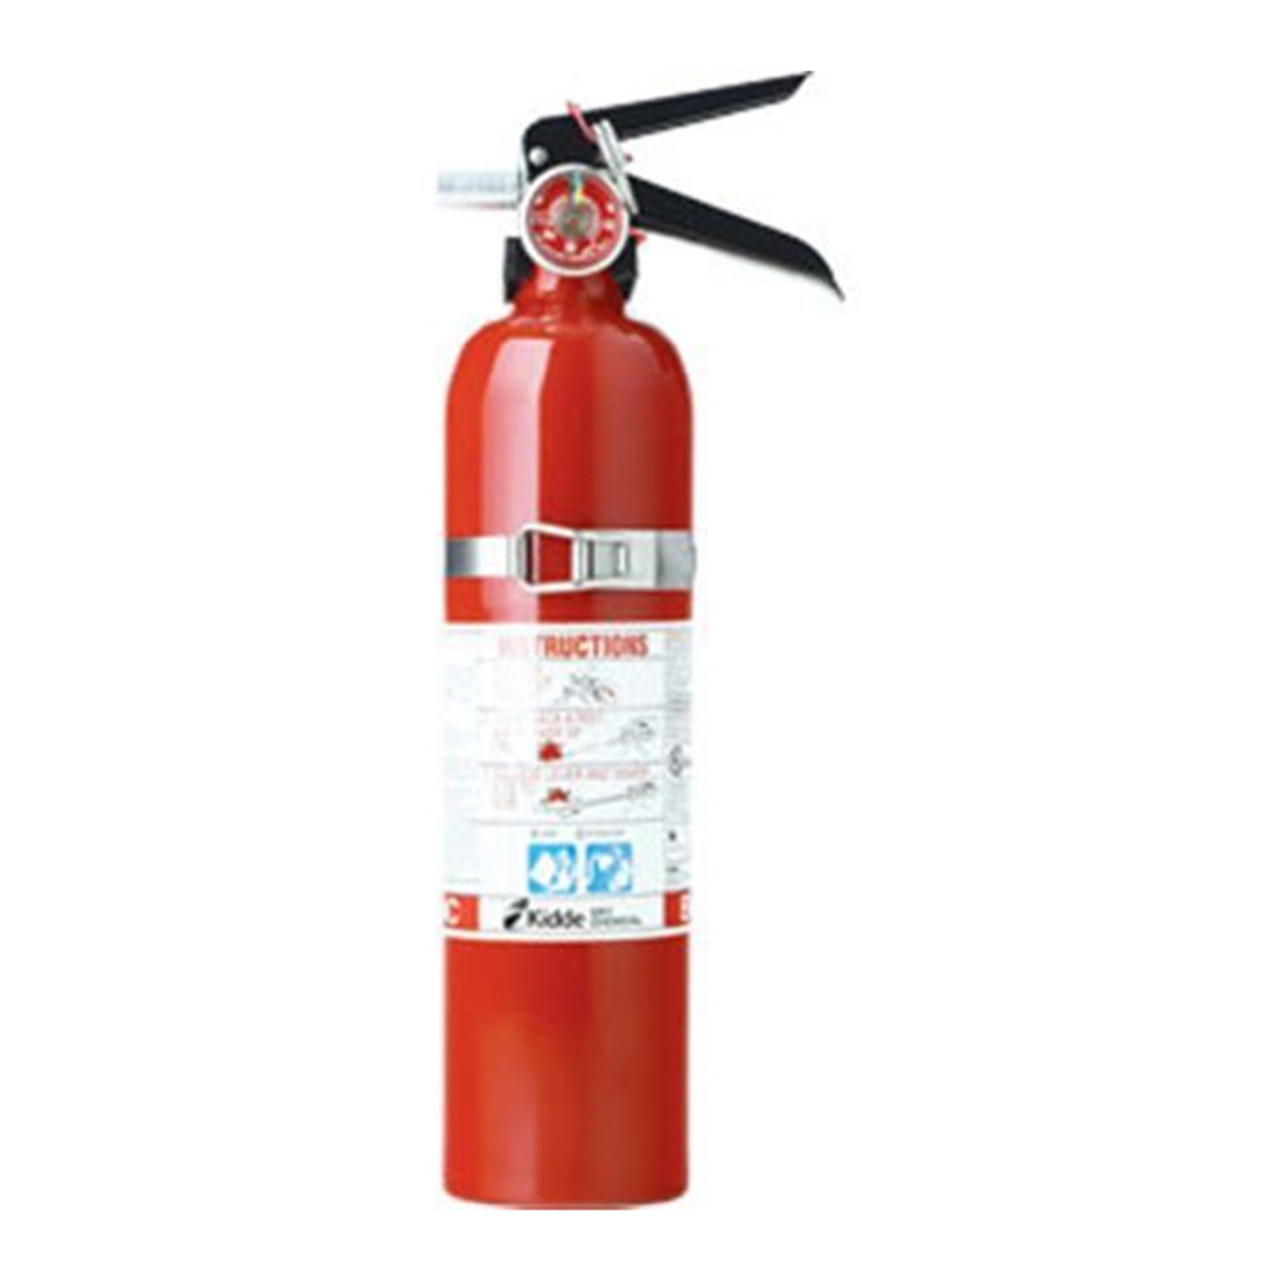 kidde fire extinguisher